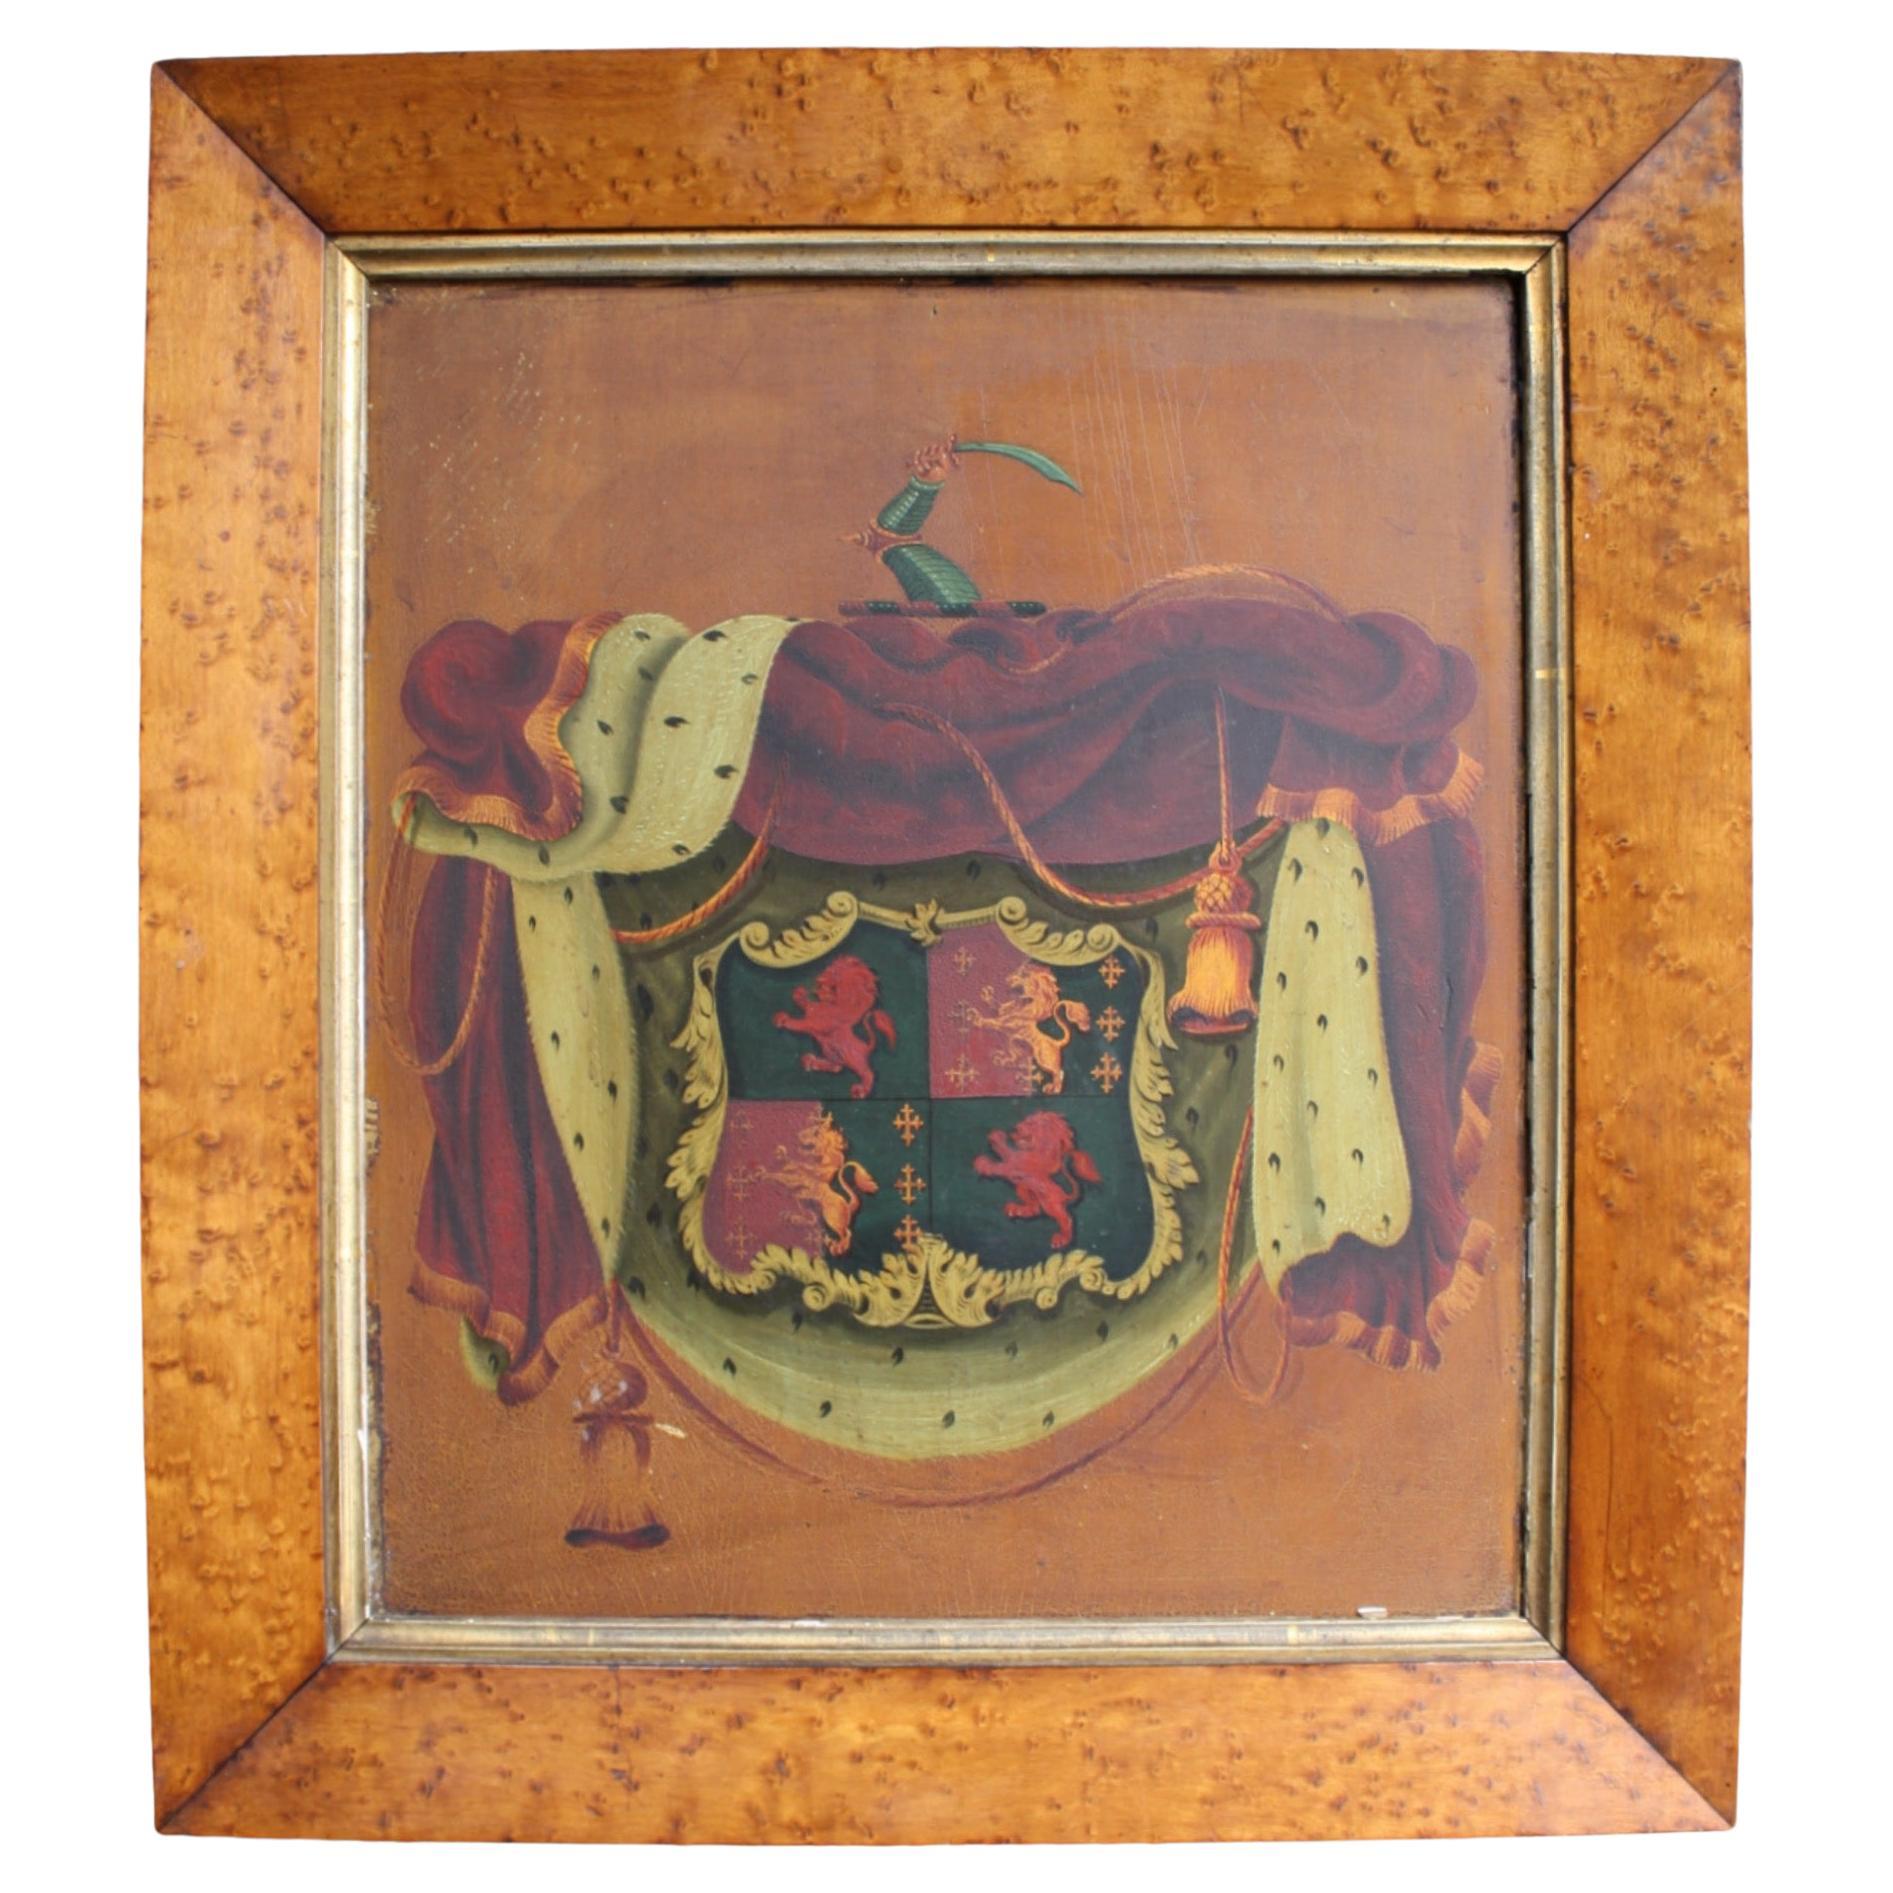 Grande huile sur panneau à armoiries du 19e siècle, Coach House, Angleterre, 19e siècle